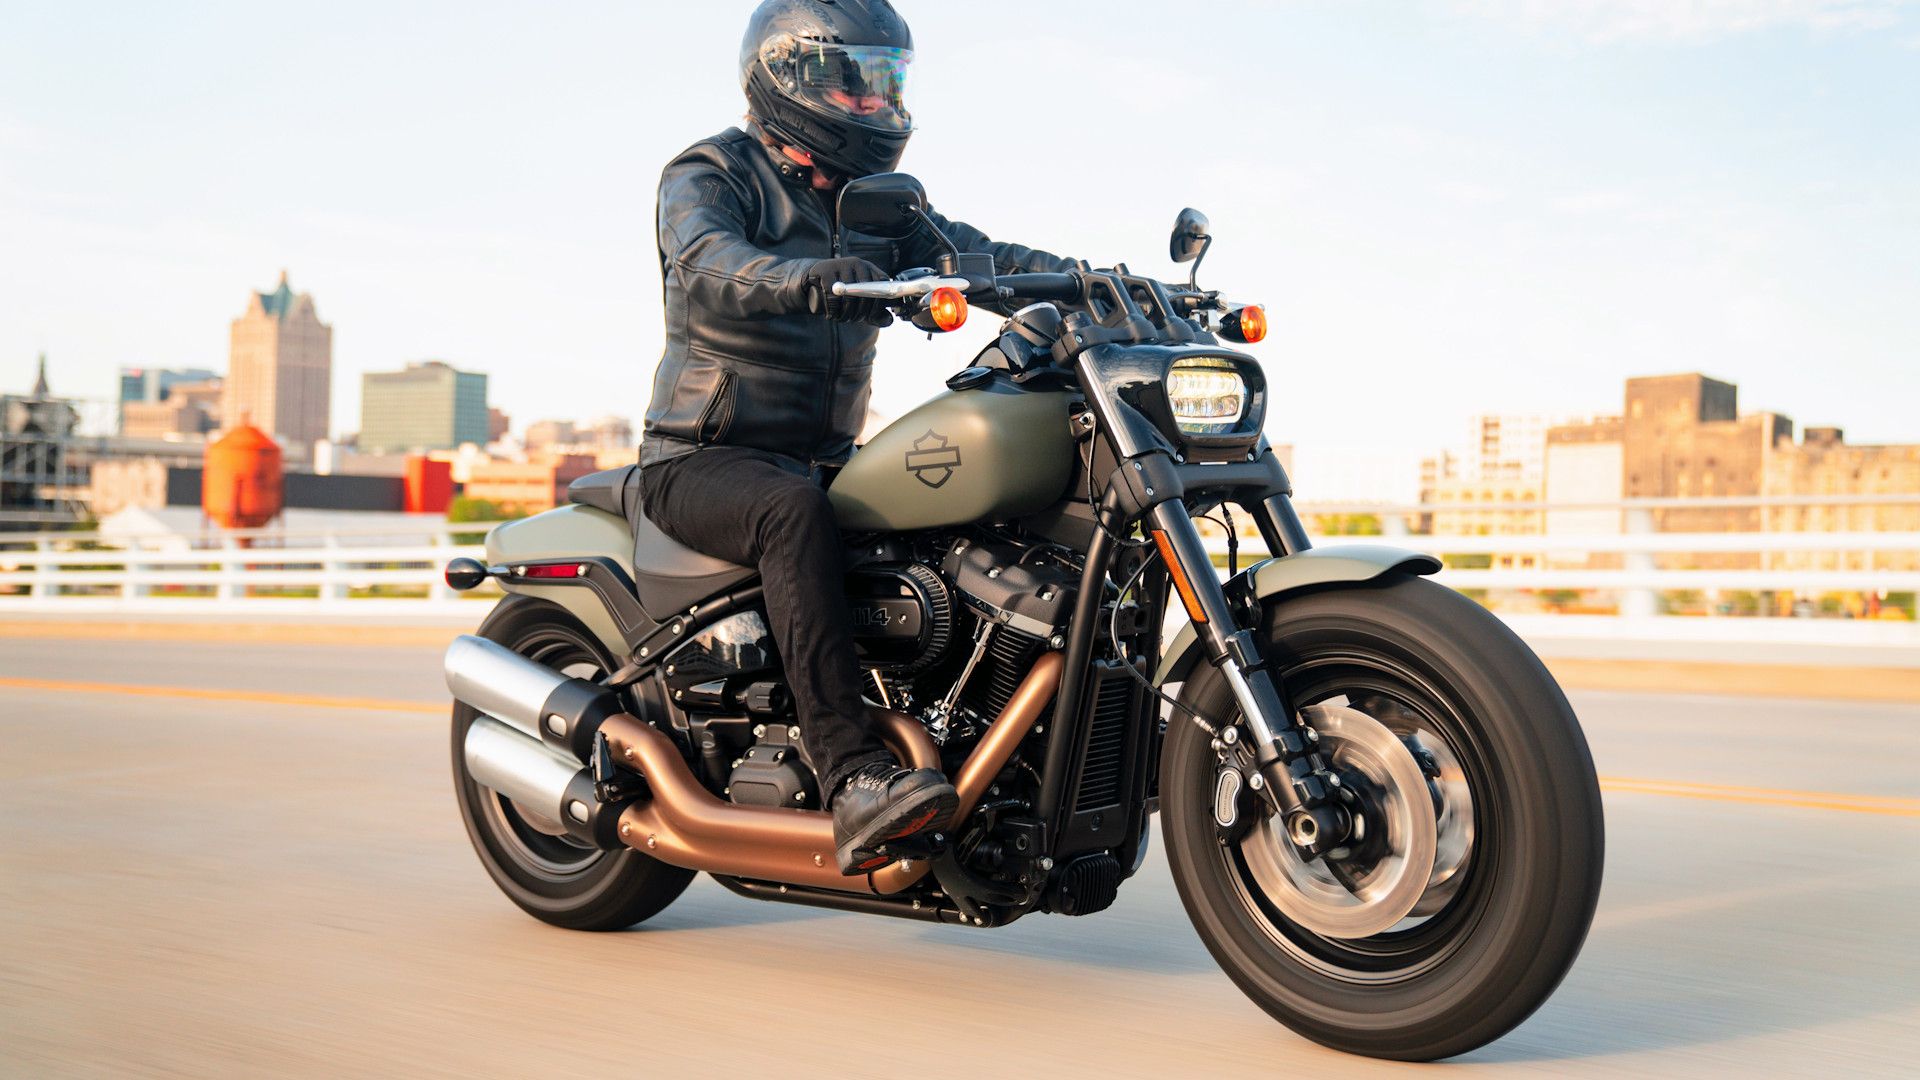 Green 2021 Harley-Davidson Fat Bob 114 cruising on the highway